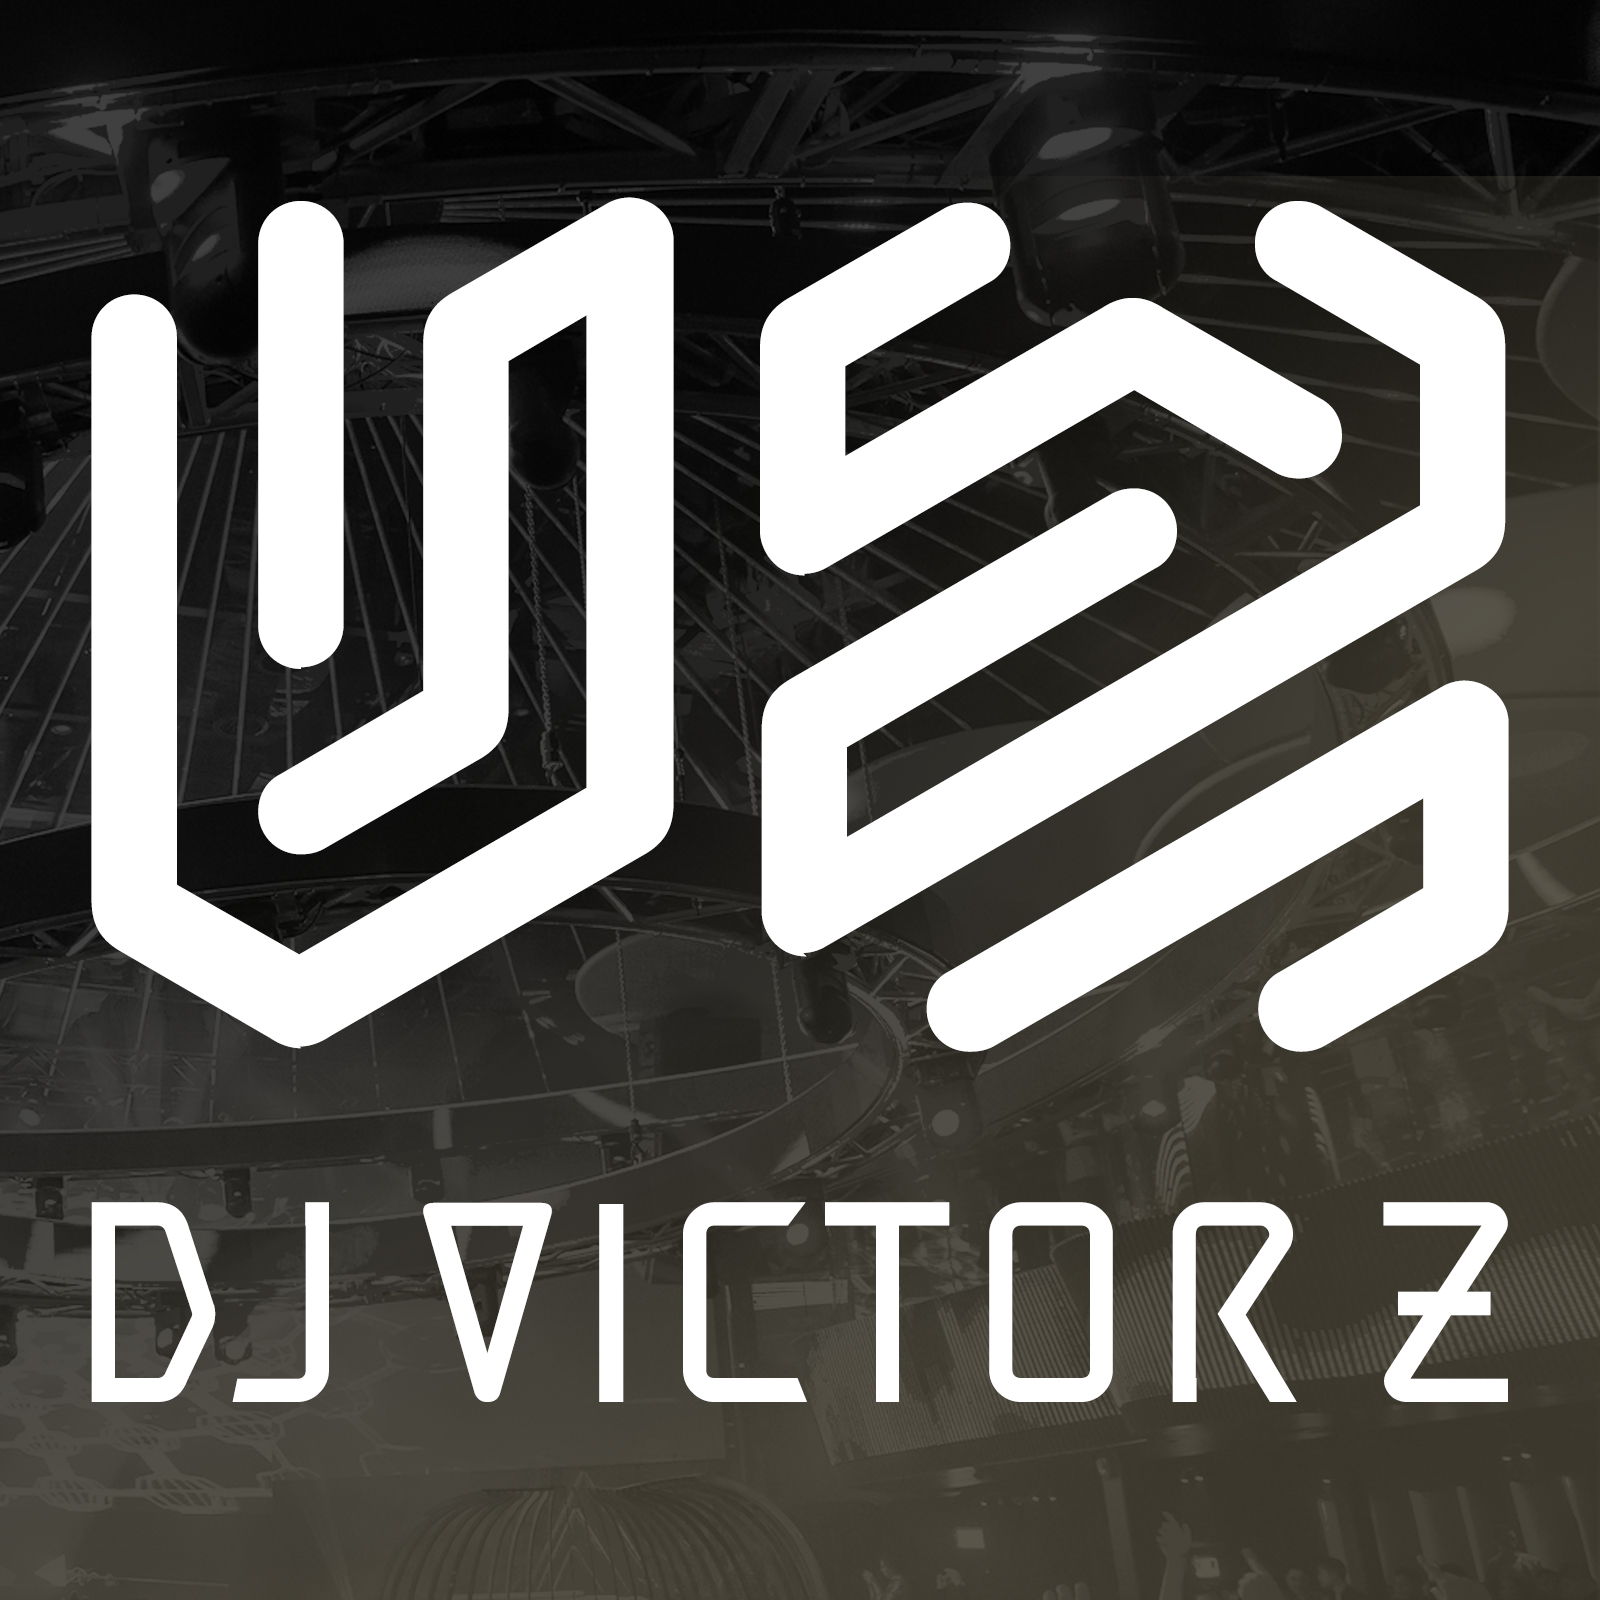 DJ VICTOR Z